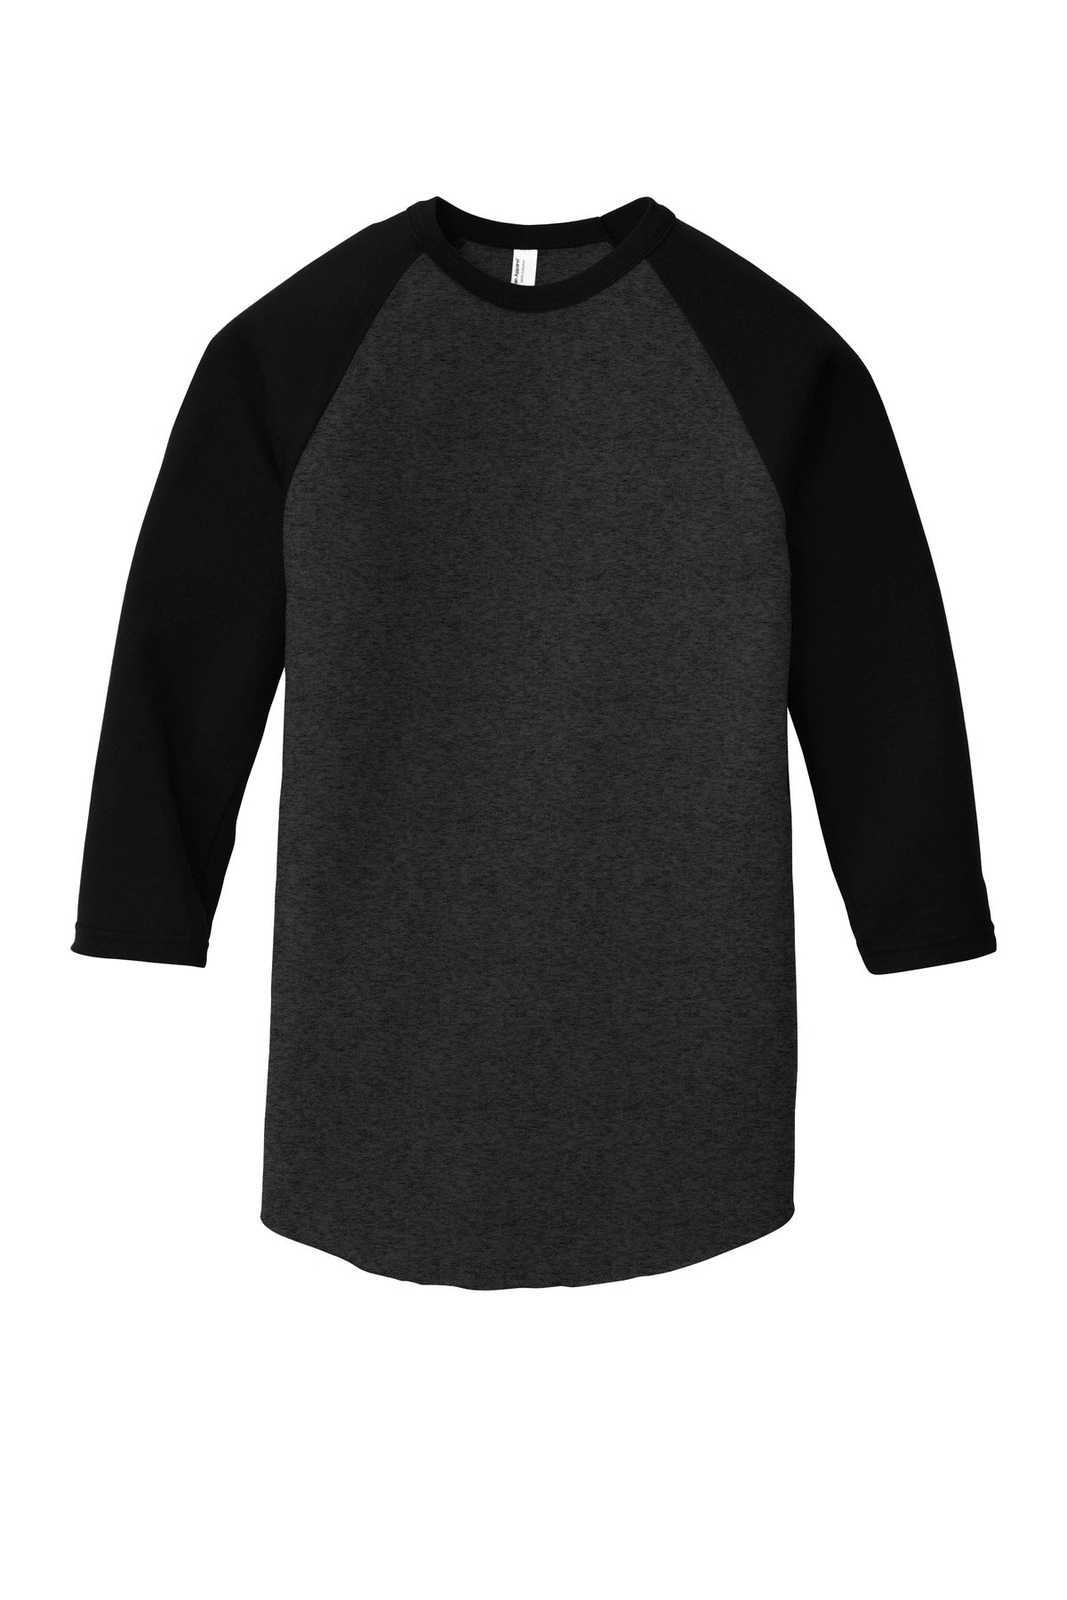 American Apparel BB453W Poly-Cotton 3/4-Sleeve Raglan T-Shirt - Heather Black Black - HIT a Double